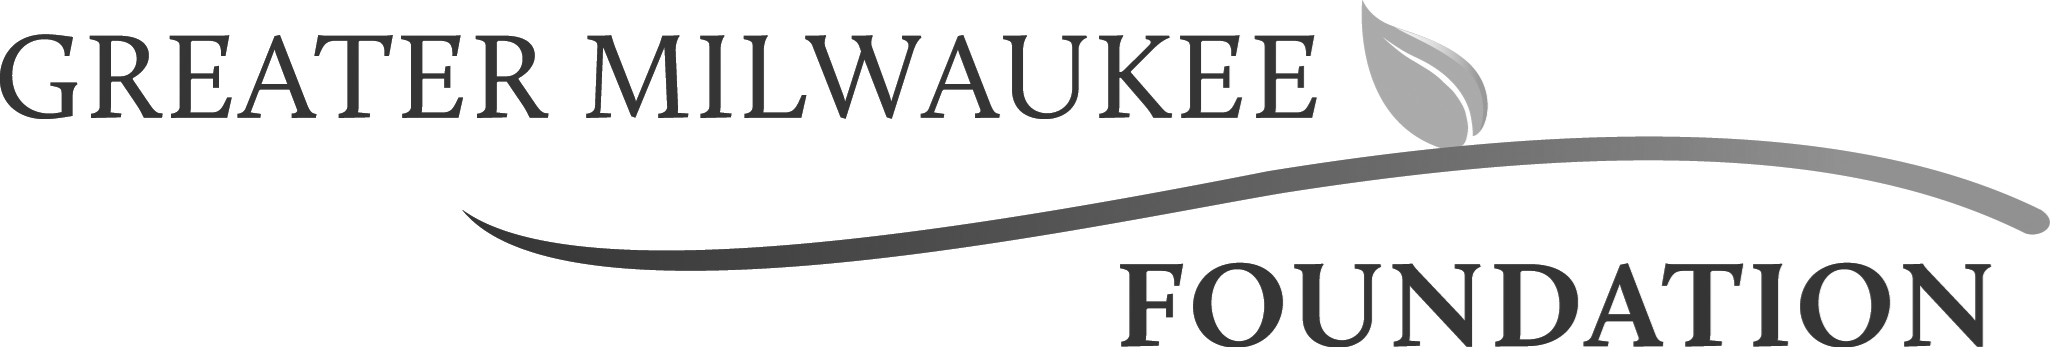 Greater milwaukee foundatin logo